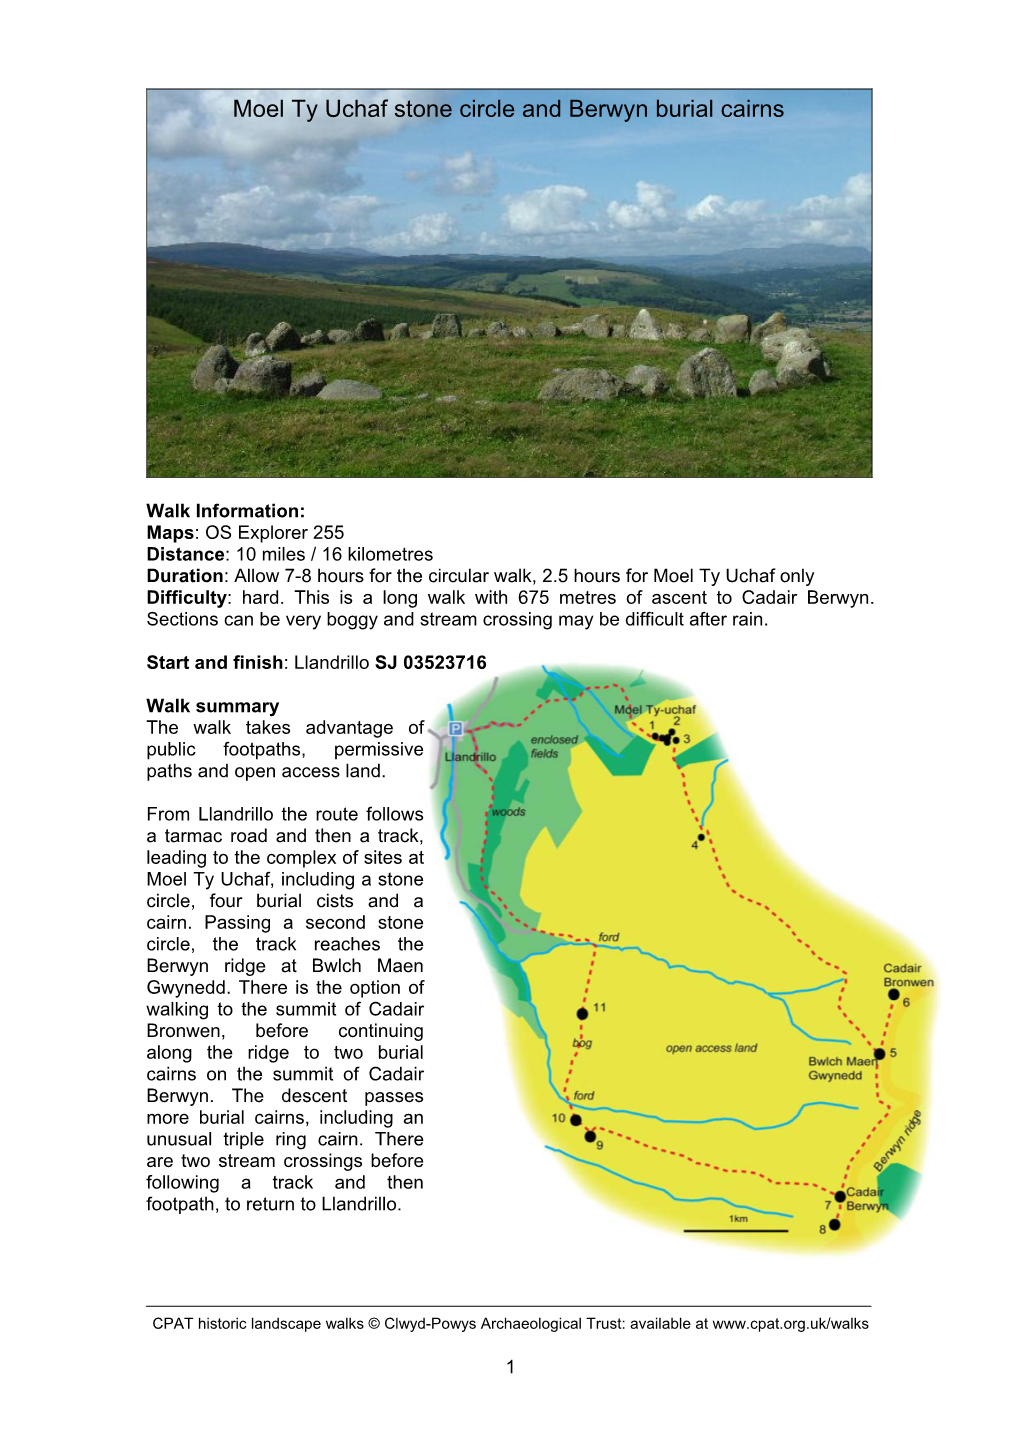 Moel Ty Uchaf Stone Circle and Berwyn Burial Cairns